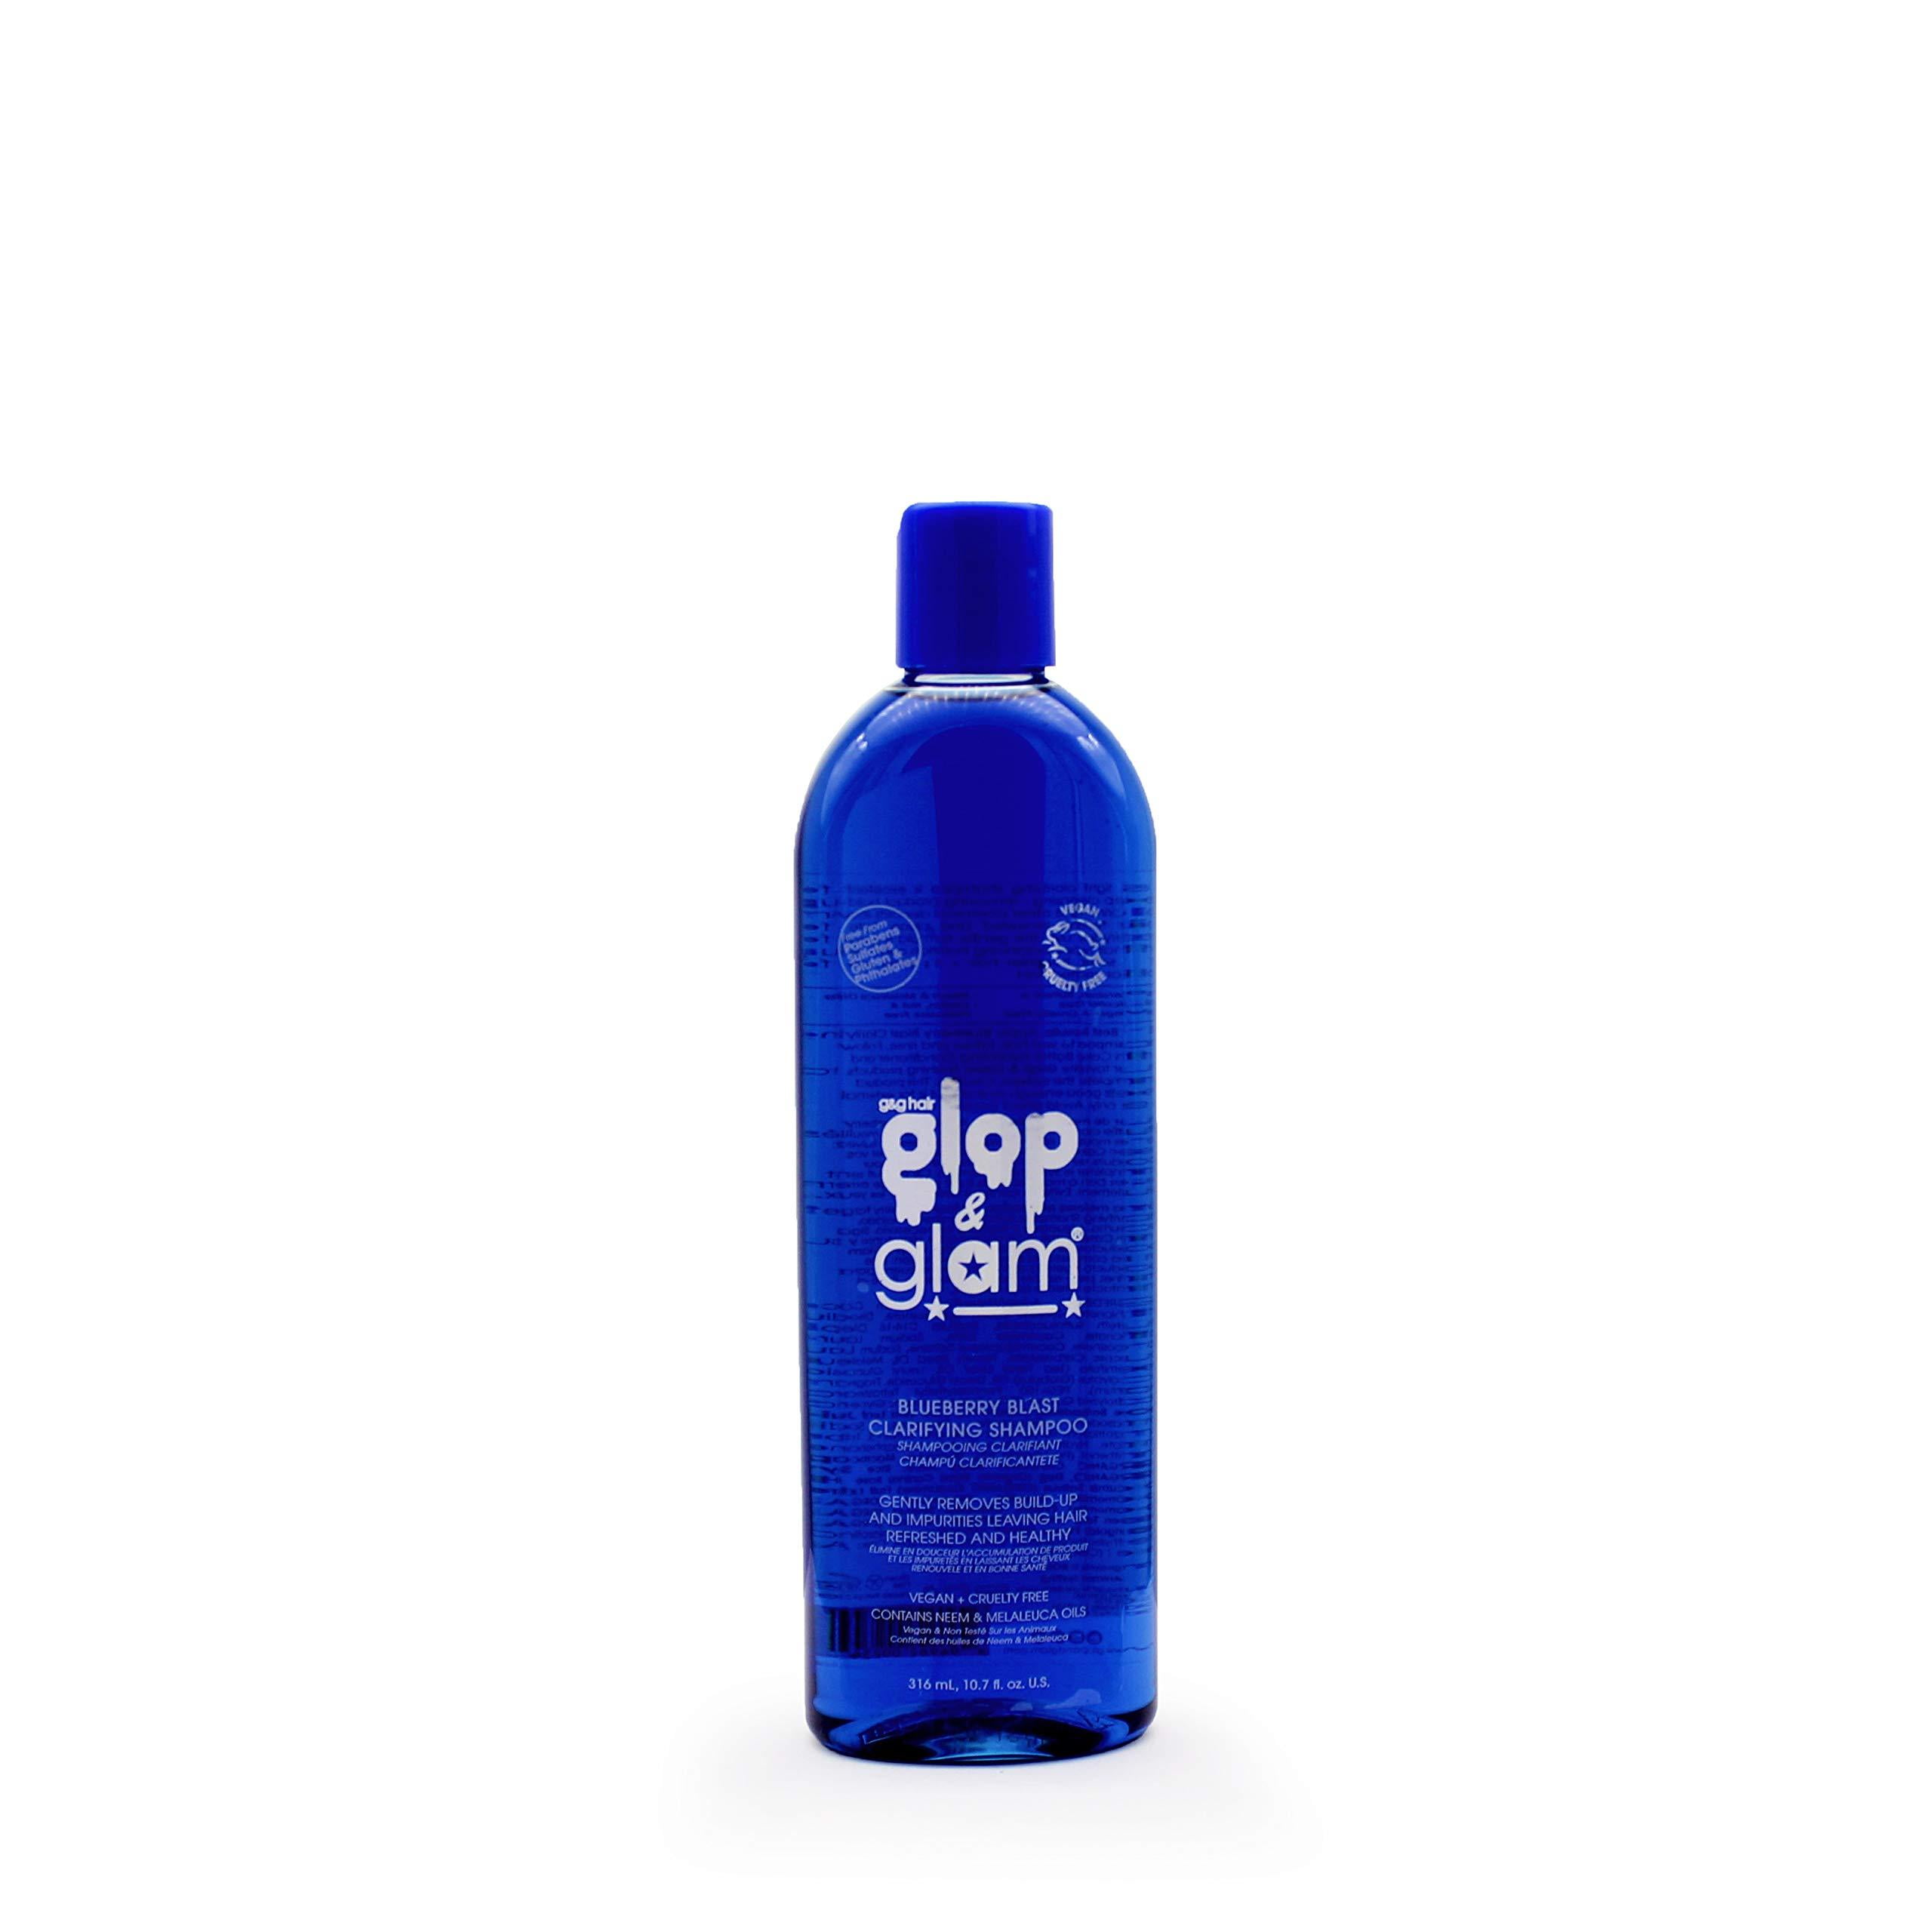 Glop and Glam Blueberry Blast Shampoo, 10 Ounce 